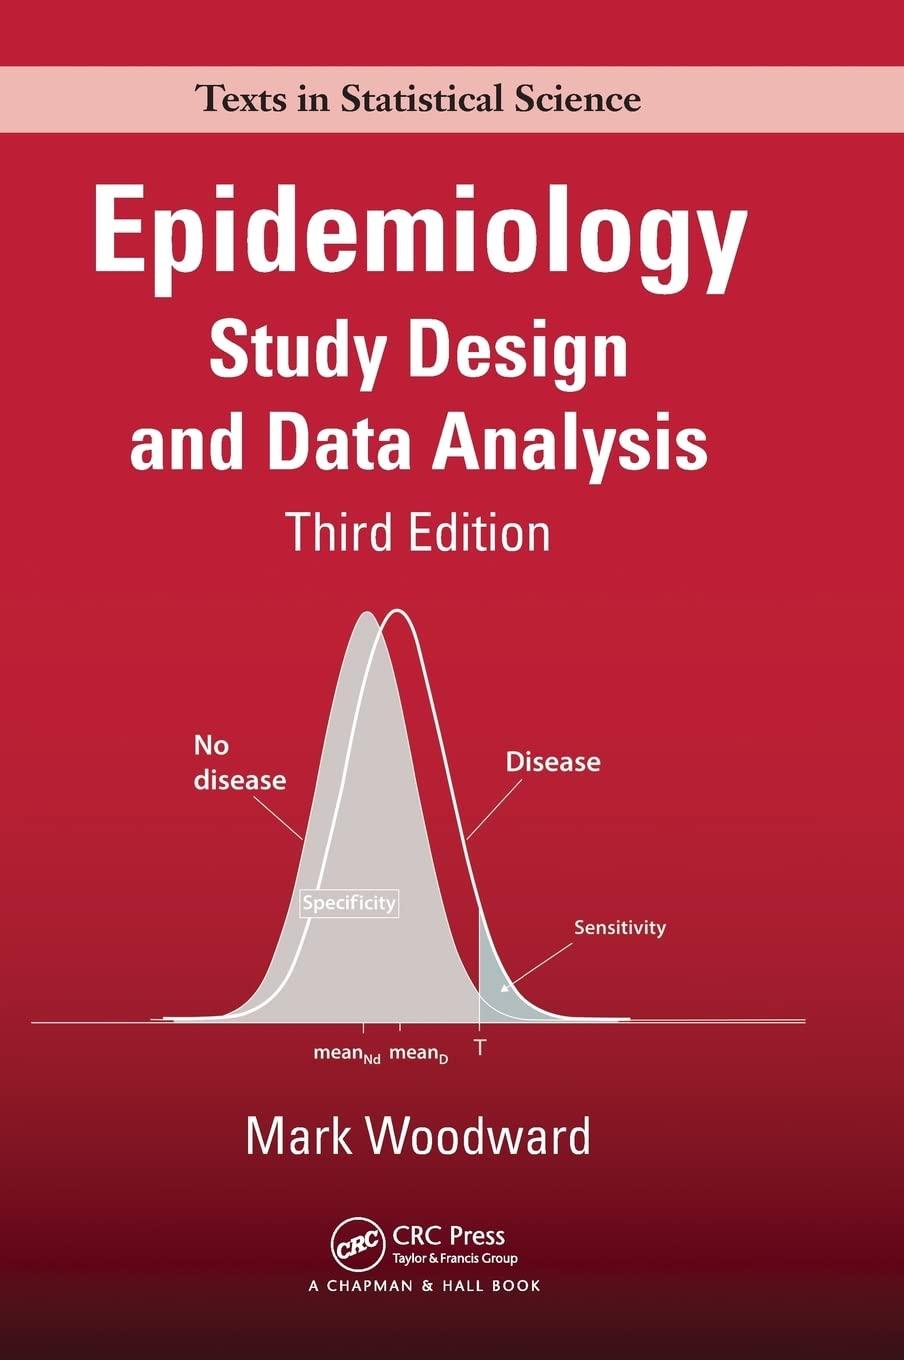 epidemiology study design and data analysis 3rd edition mark woodward 1439839700, 978-1439839706